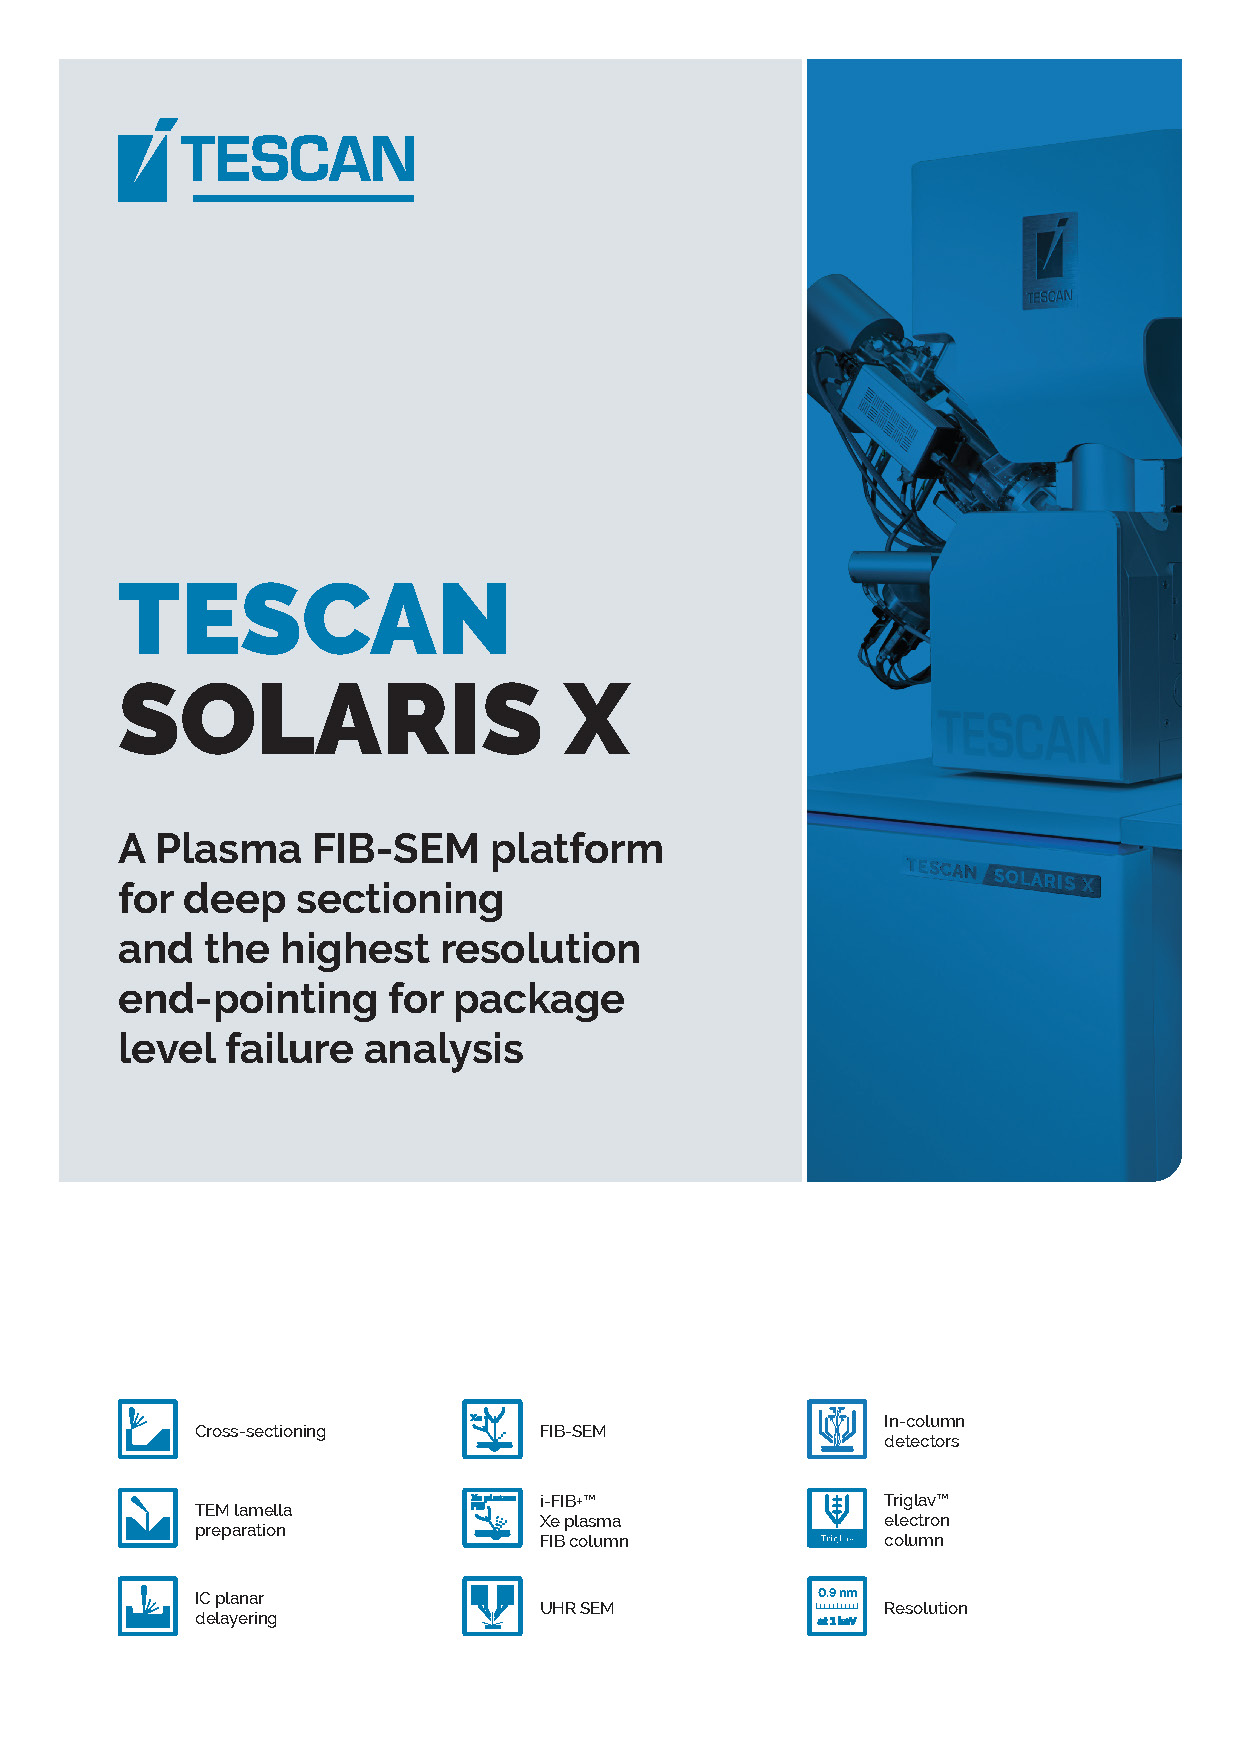 TESCAN-SOLARIS-X-SCパンフレット-v08_Page_01